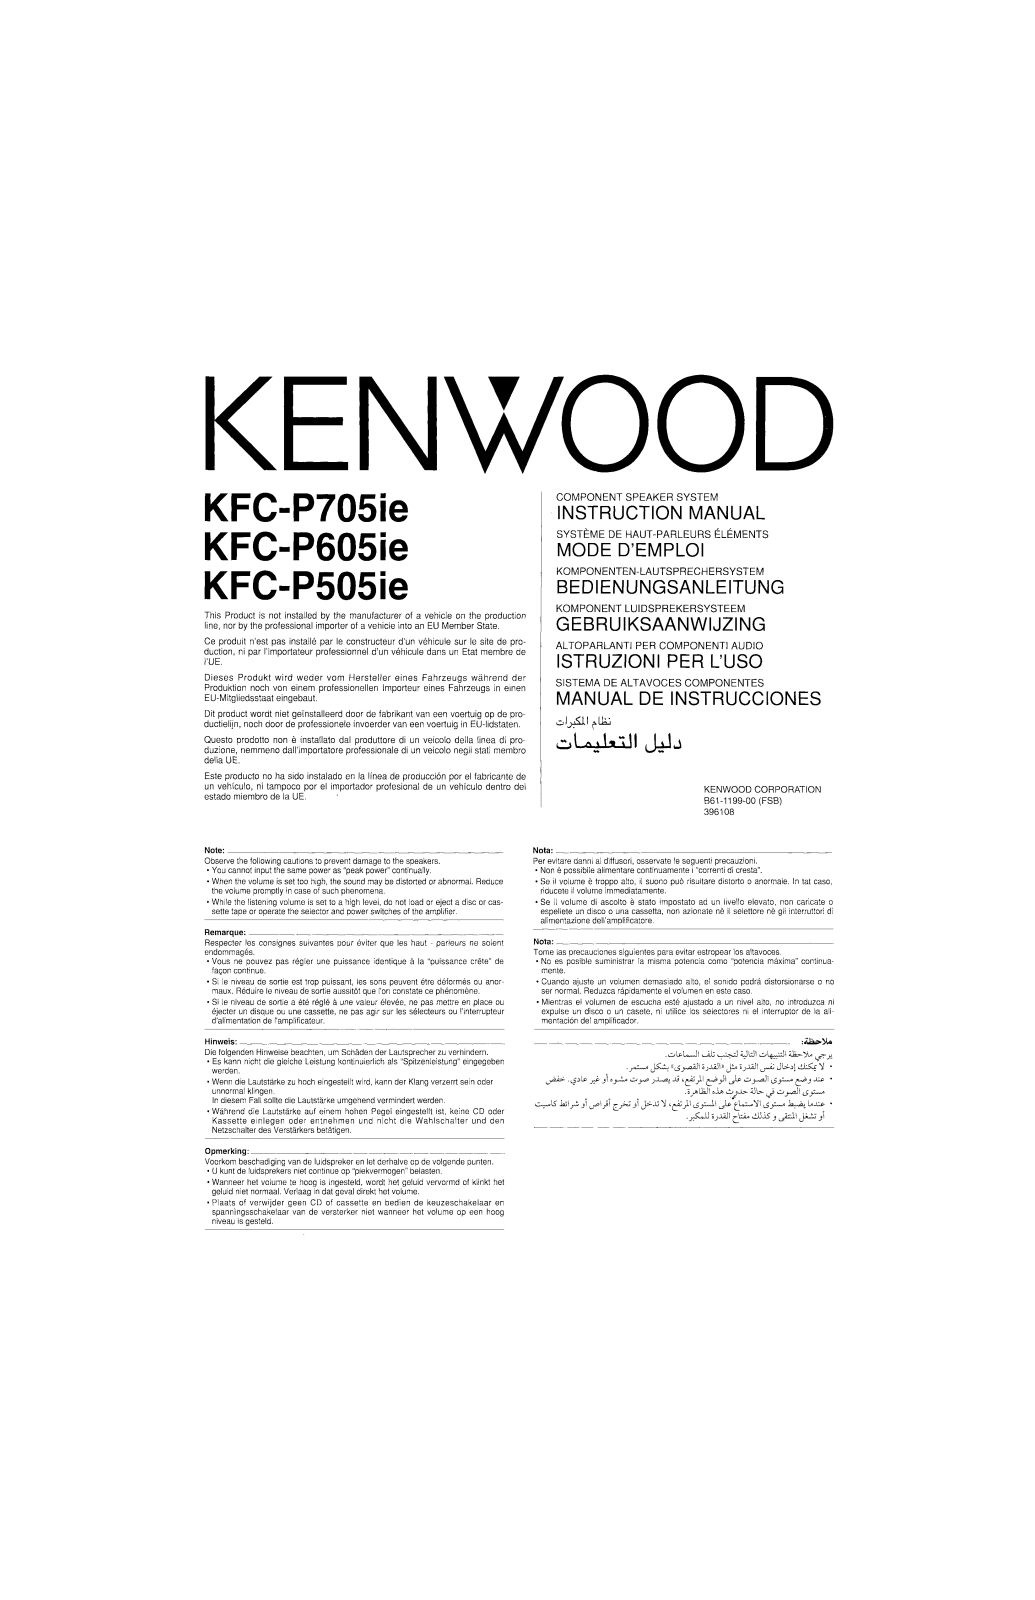 Kenwood KFC-P605ie, KFC-P705ie, KFC-P505ie Owner's Manual